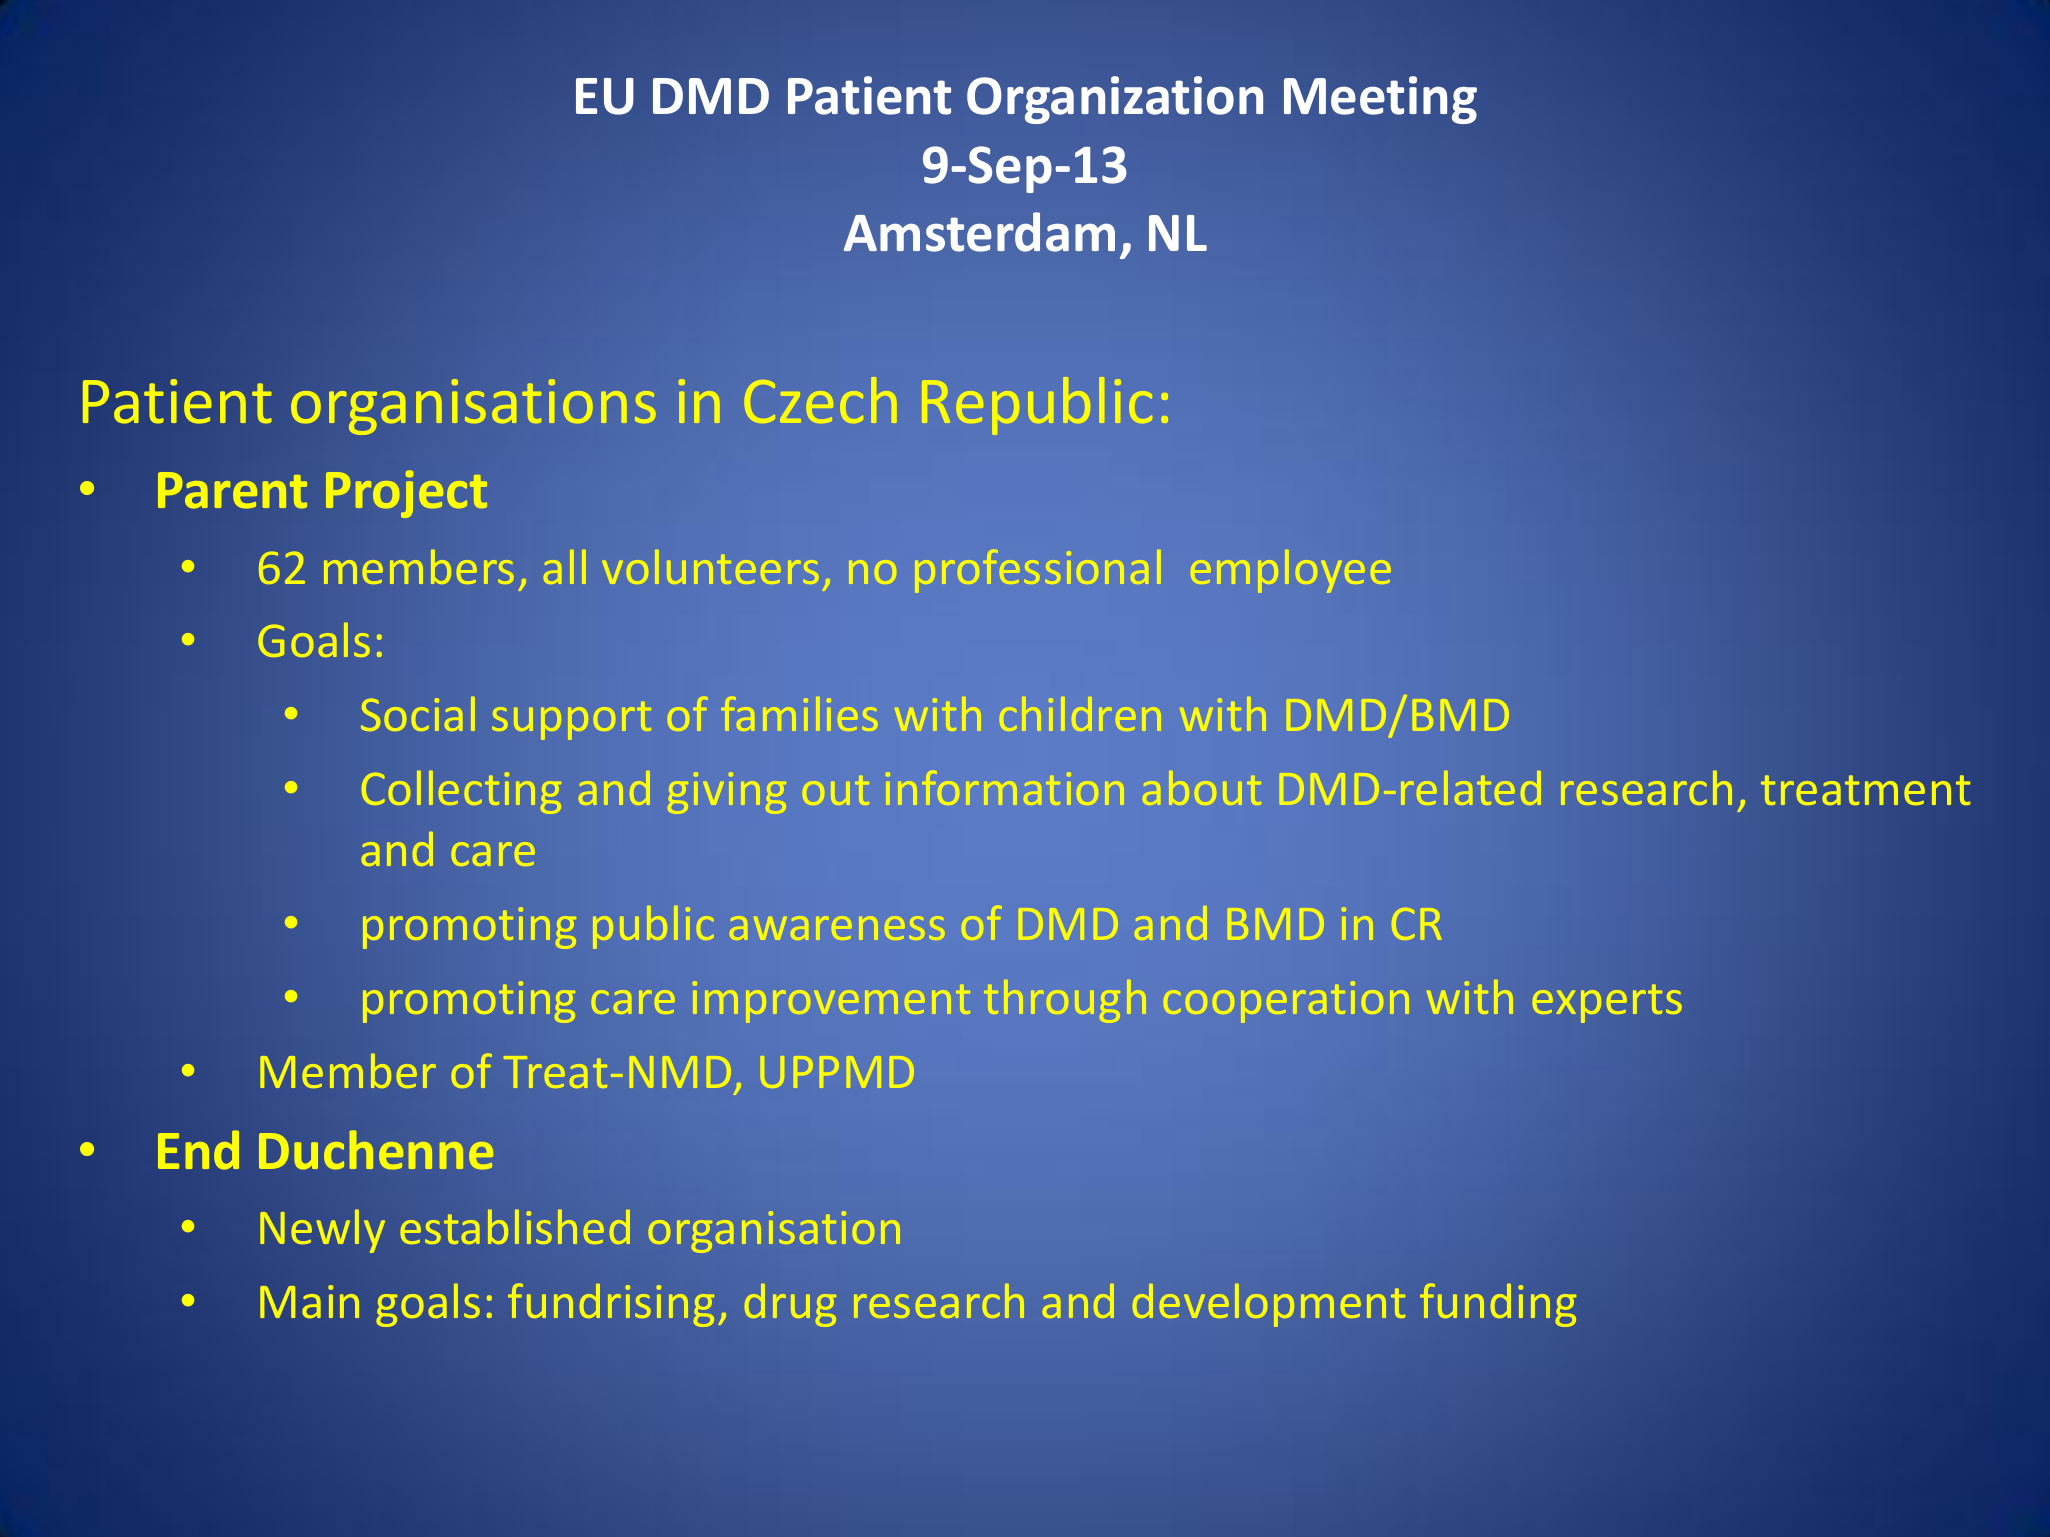 EU DMD Patient Organization Meeting – Amsterdam